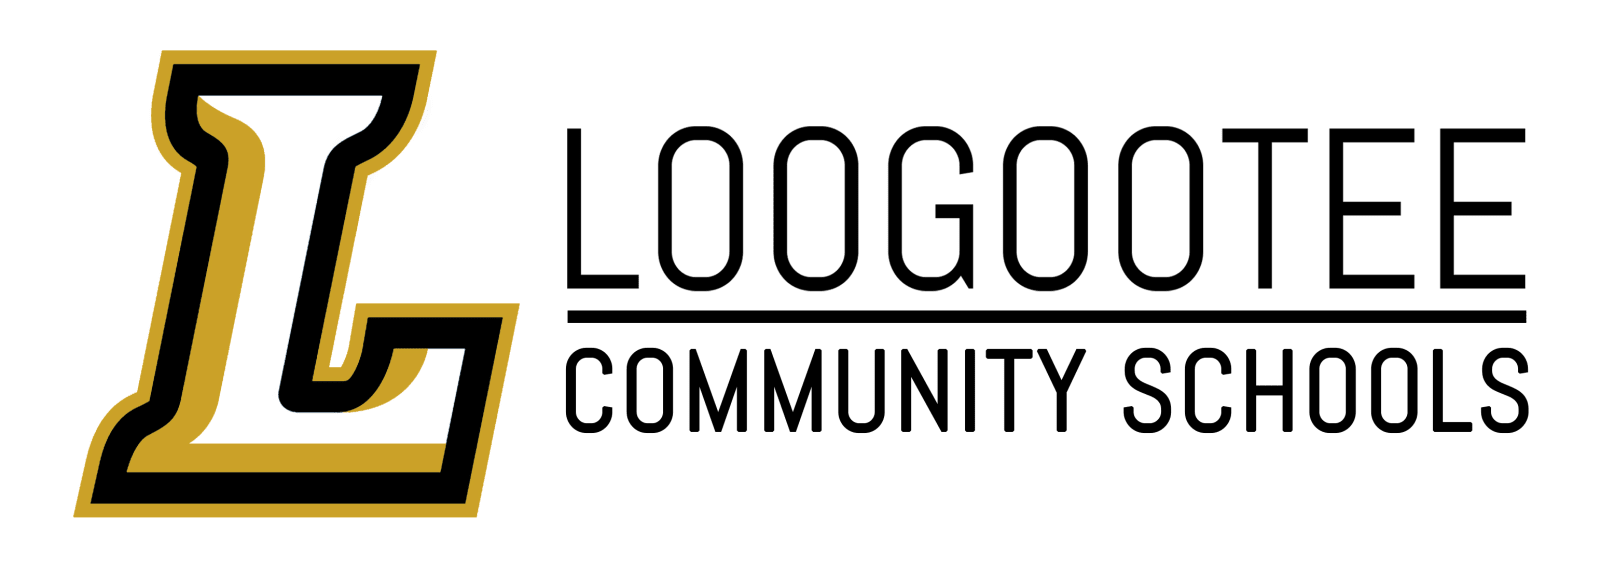 Loogootee Community School